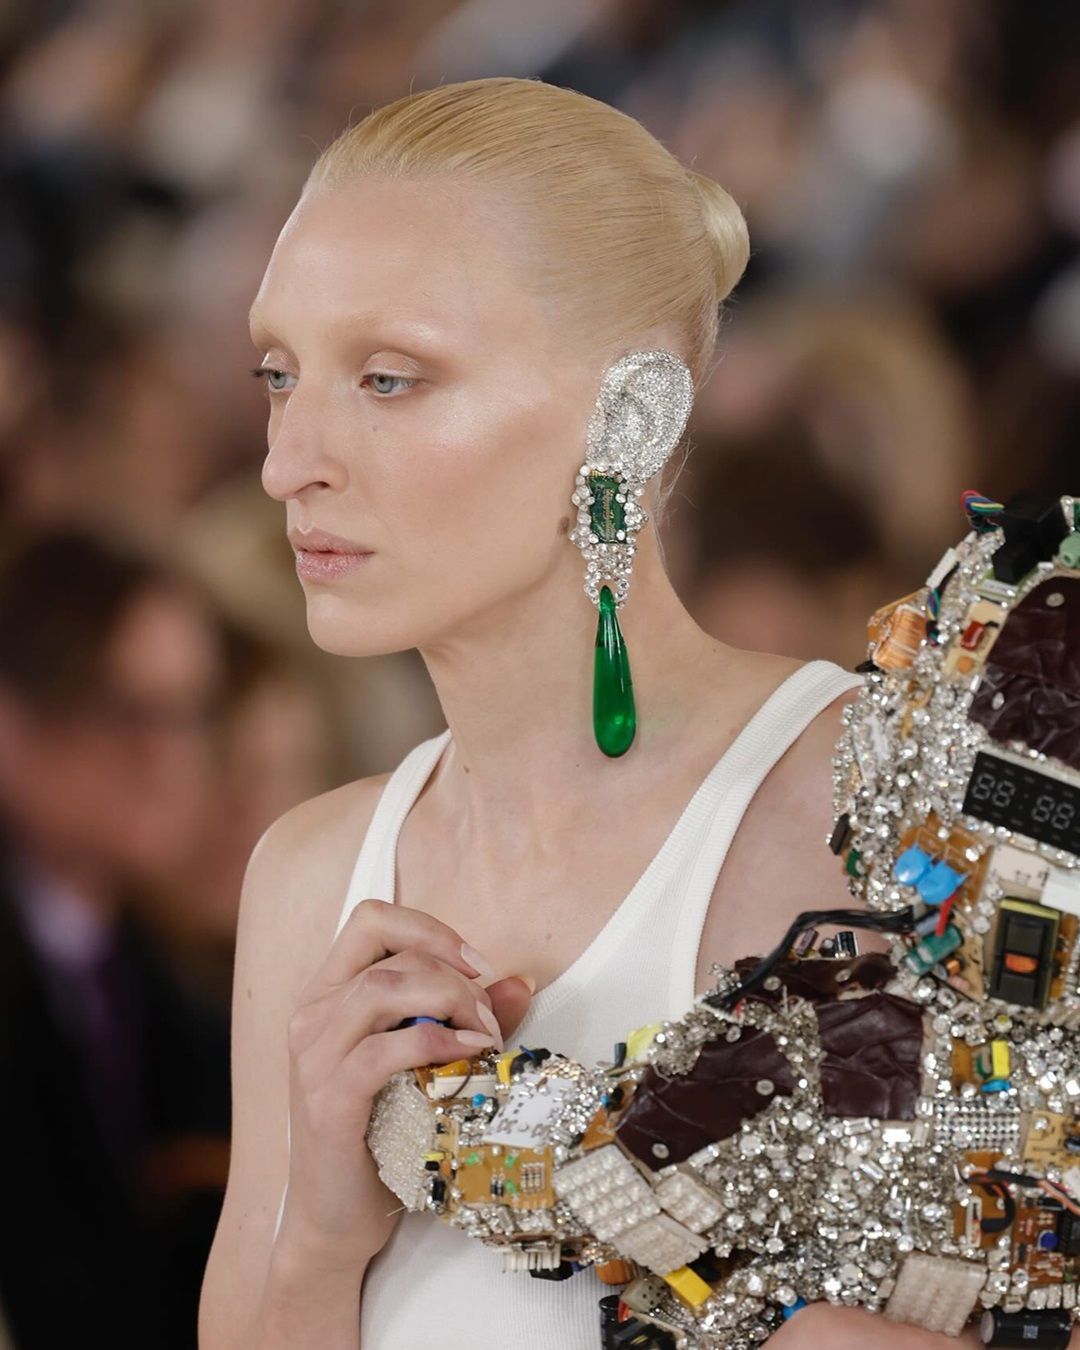 The latest beauty trend seen at Paris Fashion Week 2022 - Paris closes ...